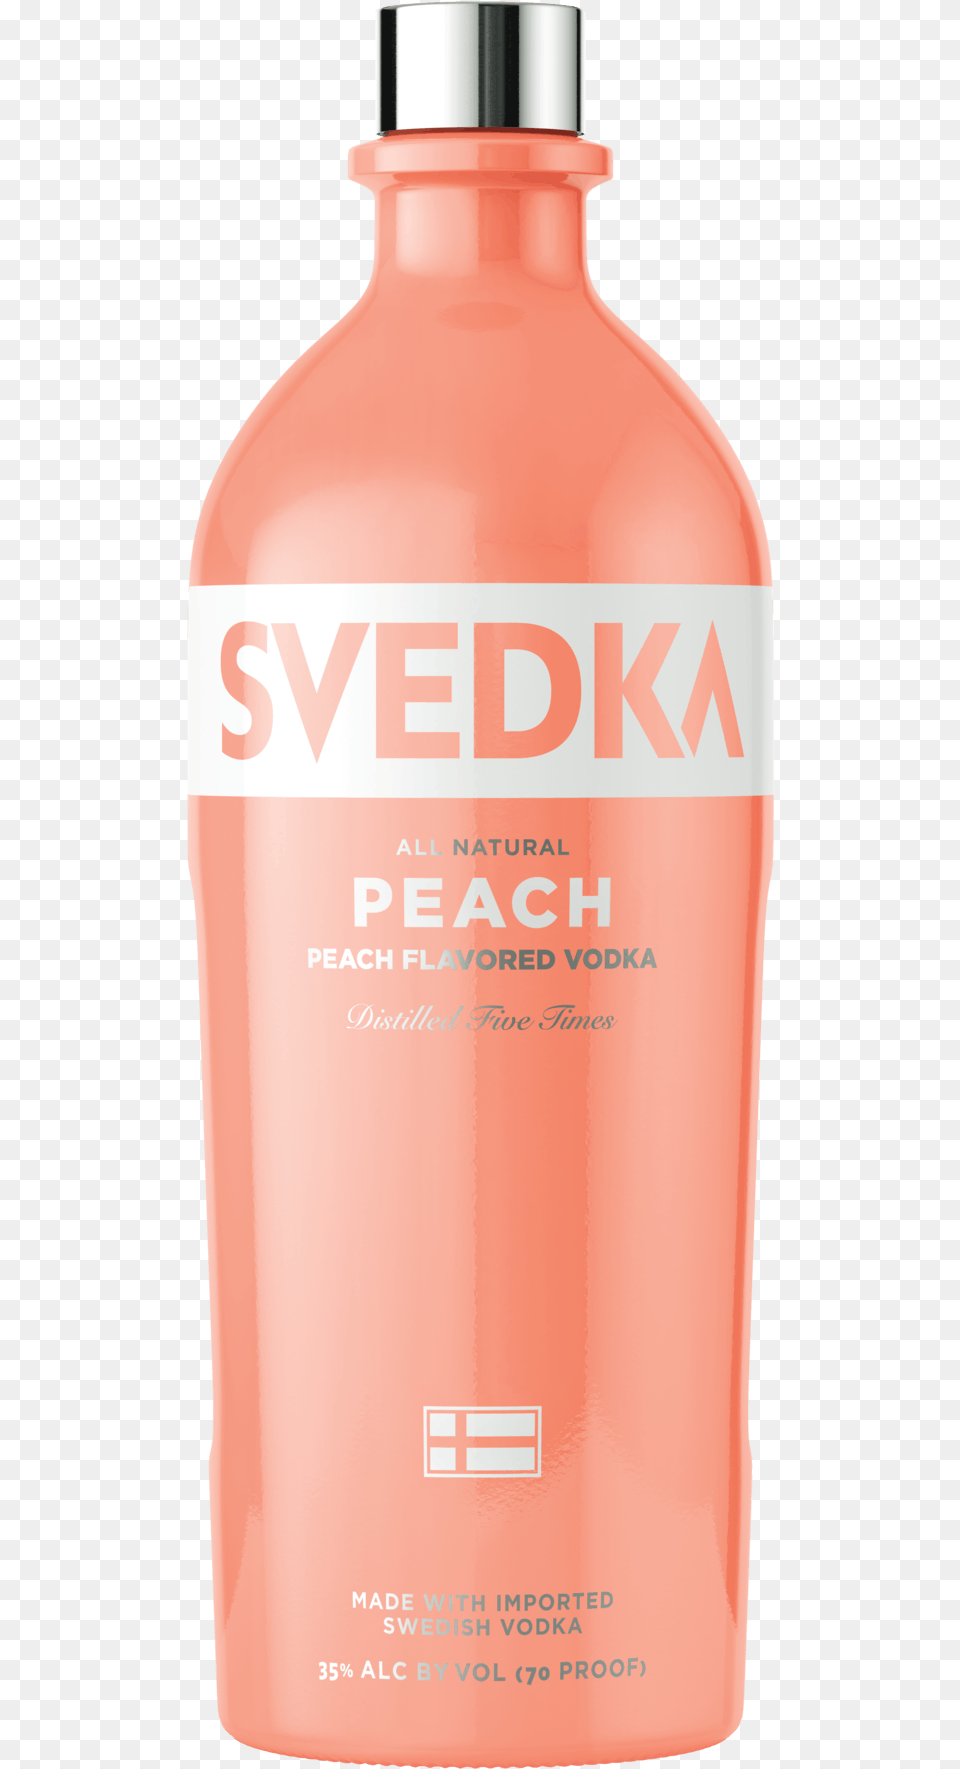 Svedka Peach Vodka Svedka Cucumber Lime Vodka, Bottle, Lotion, Shaker Free Png Download